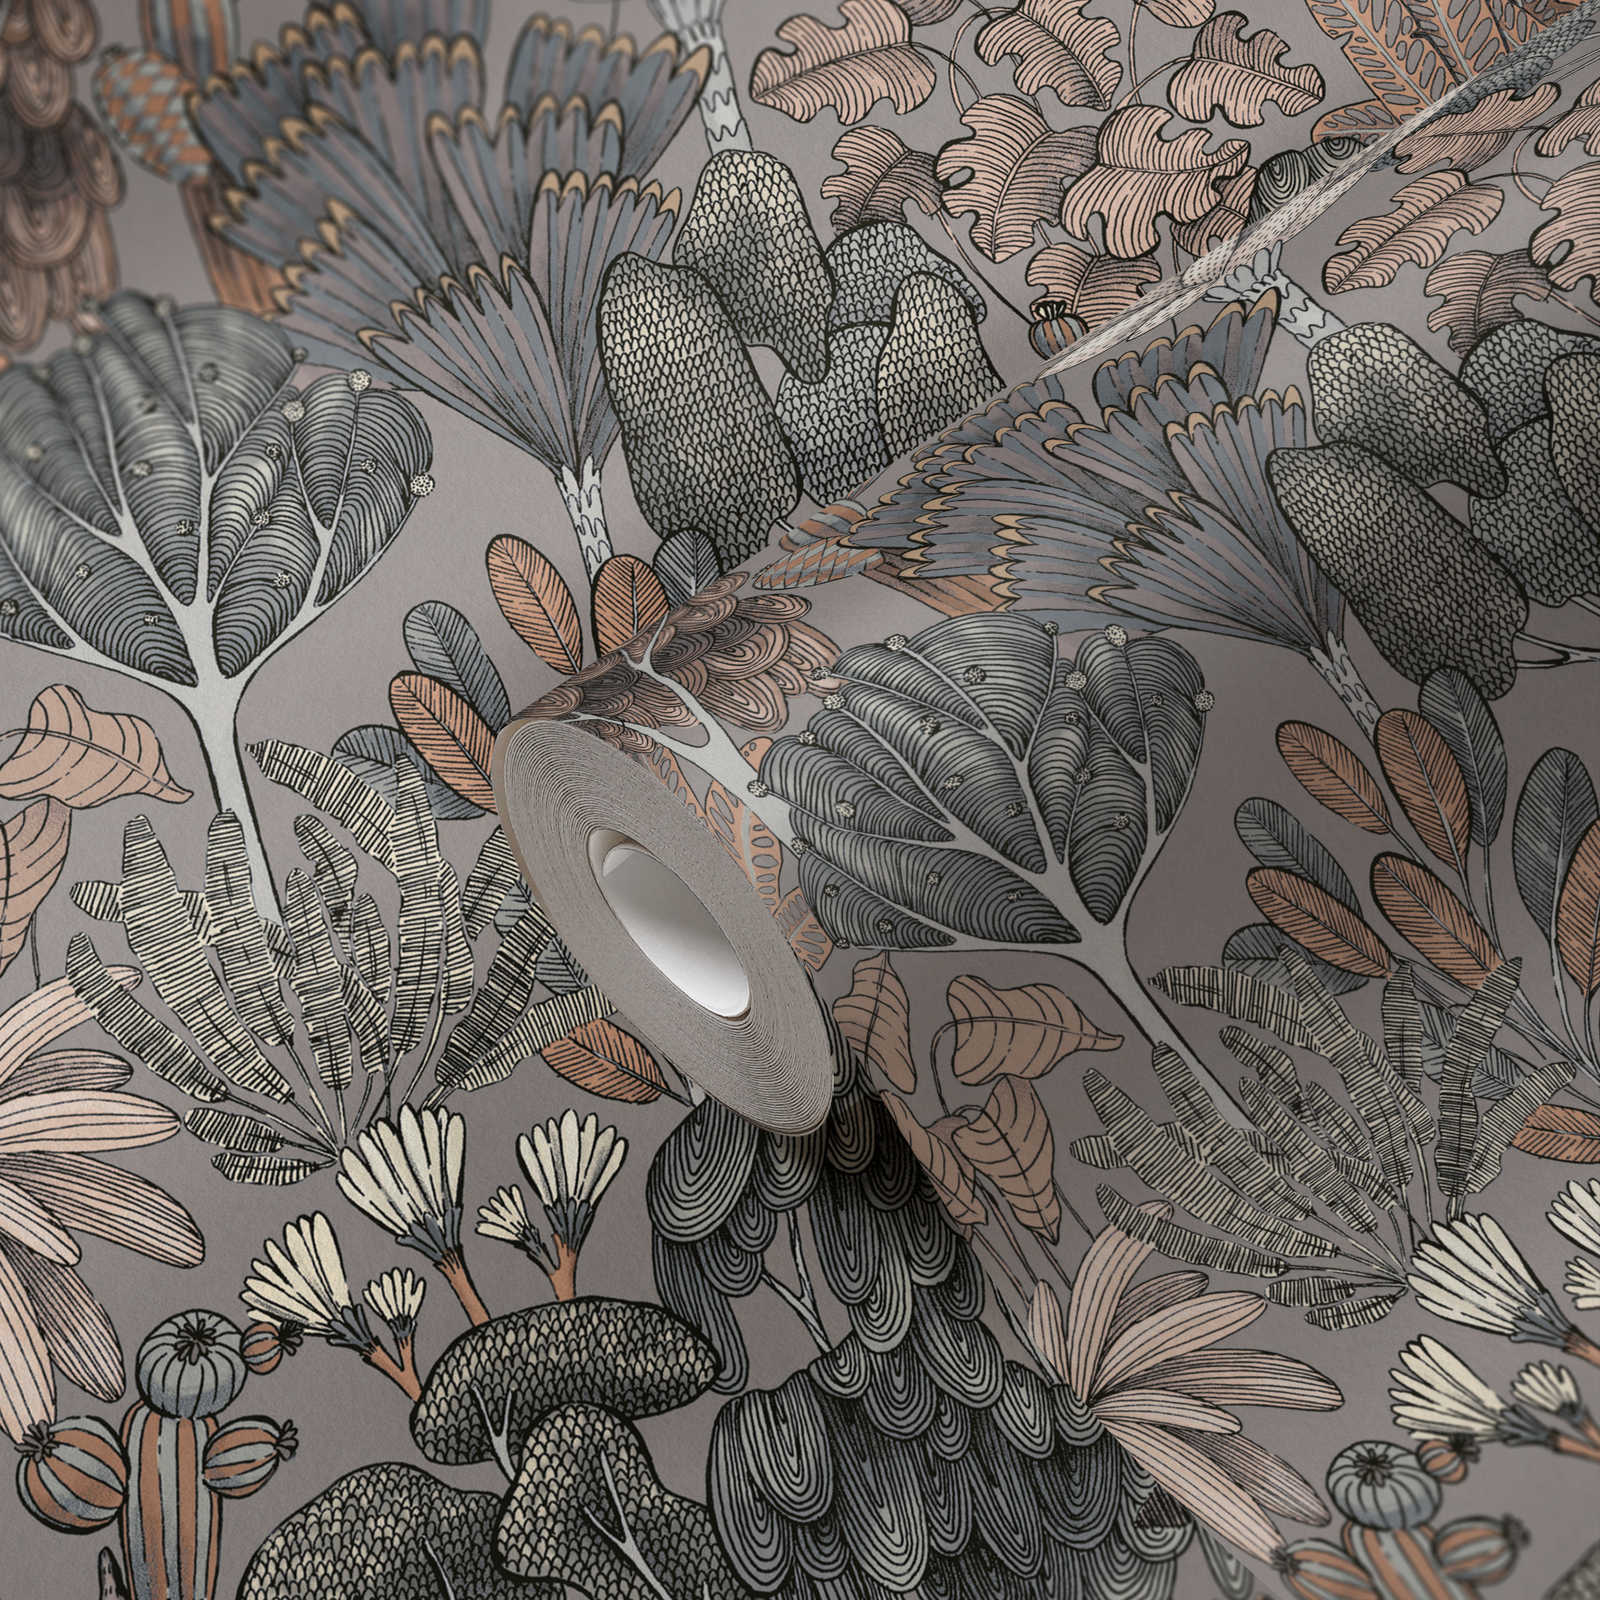             Wallpaper grey beige with floral pattern in doodle look - grey, beige, orange
        